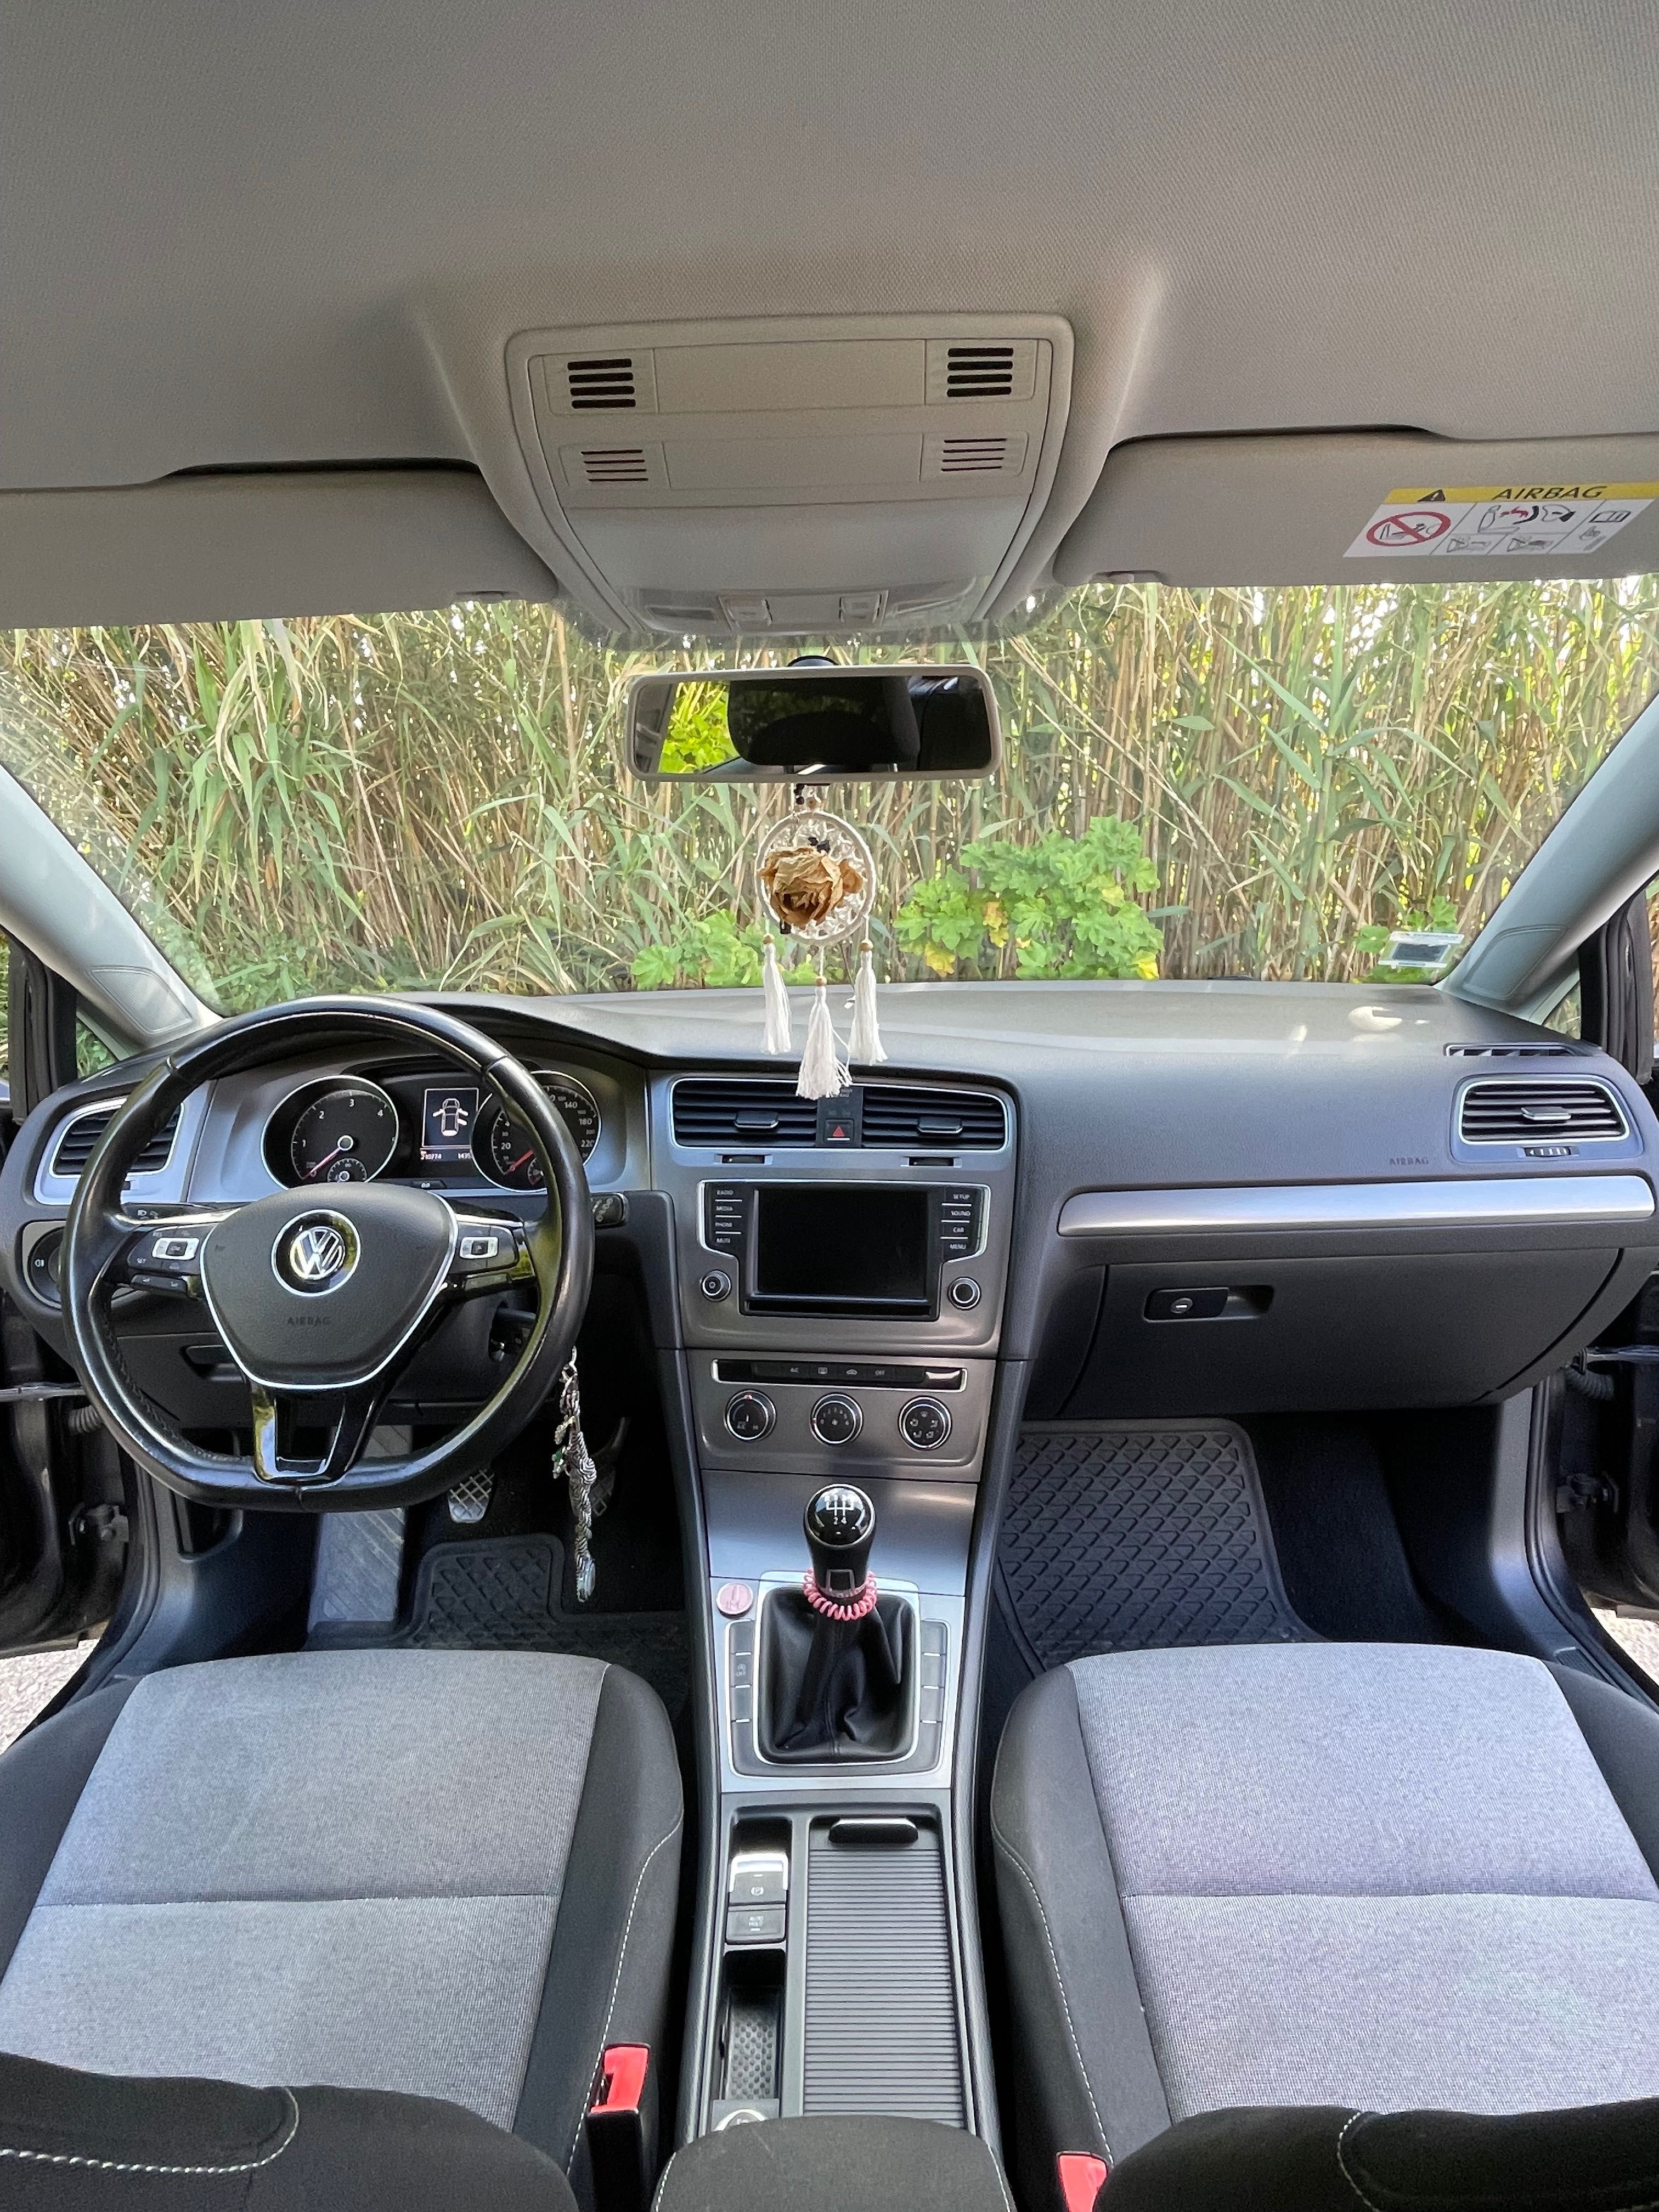 VW Golf 1.6 TDi Bluemotion Confortline